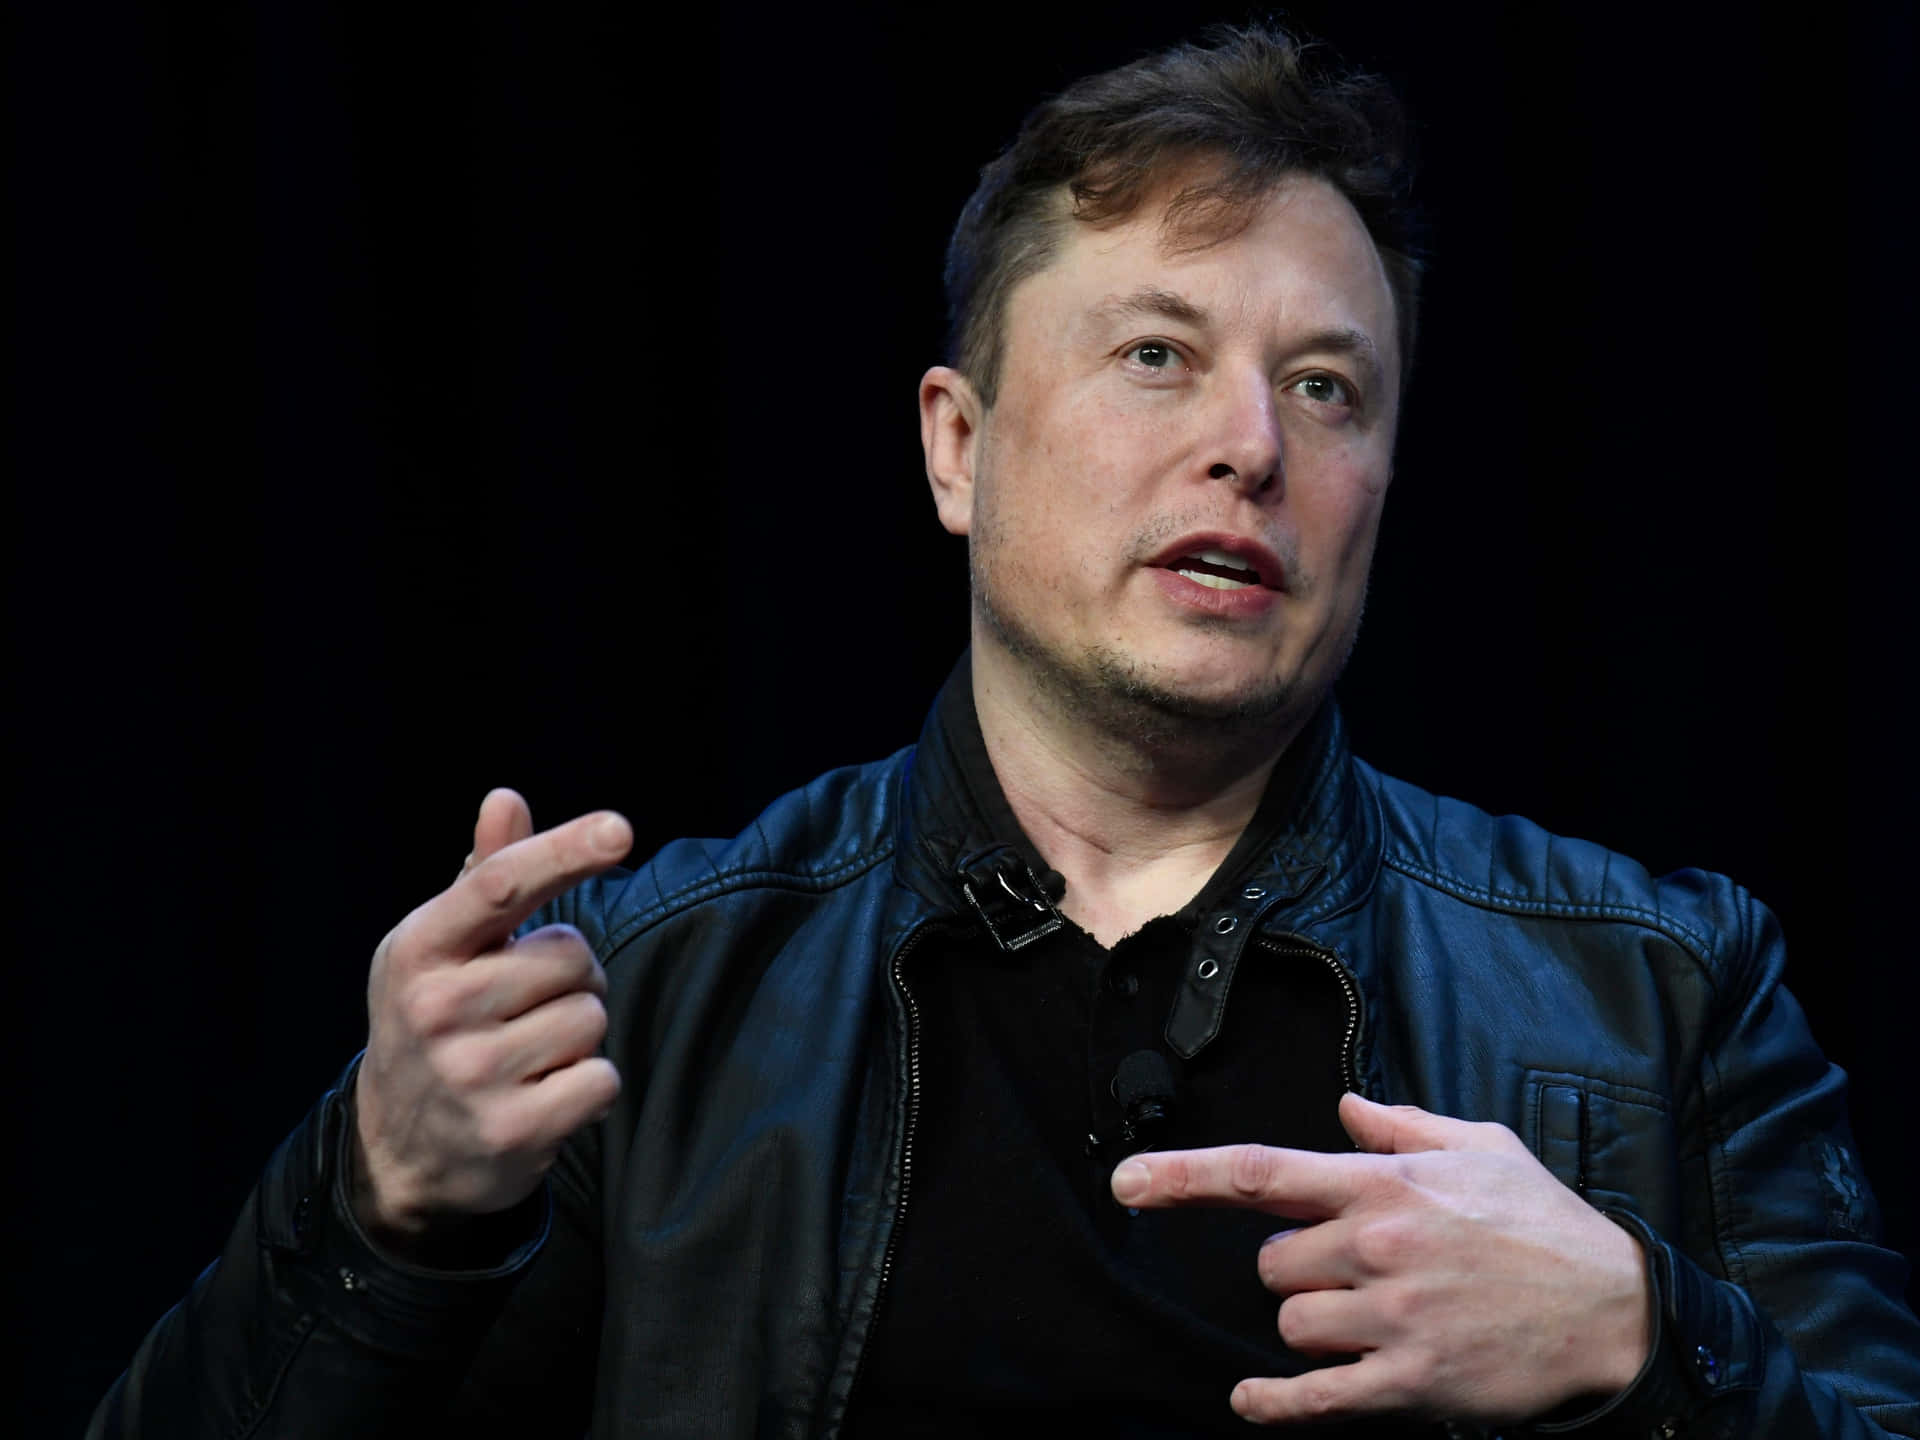 "One of the world's greatest innovators, Elon Musk"